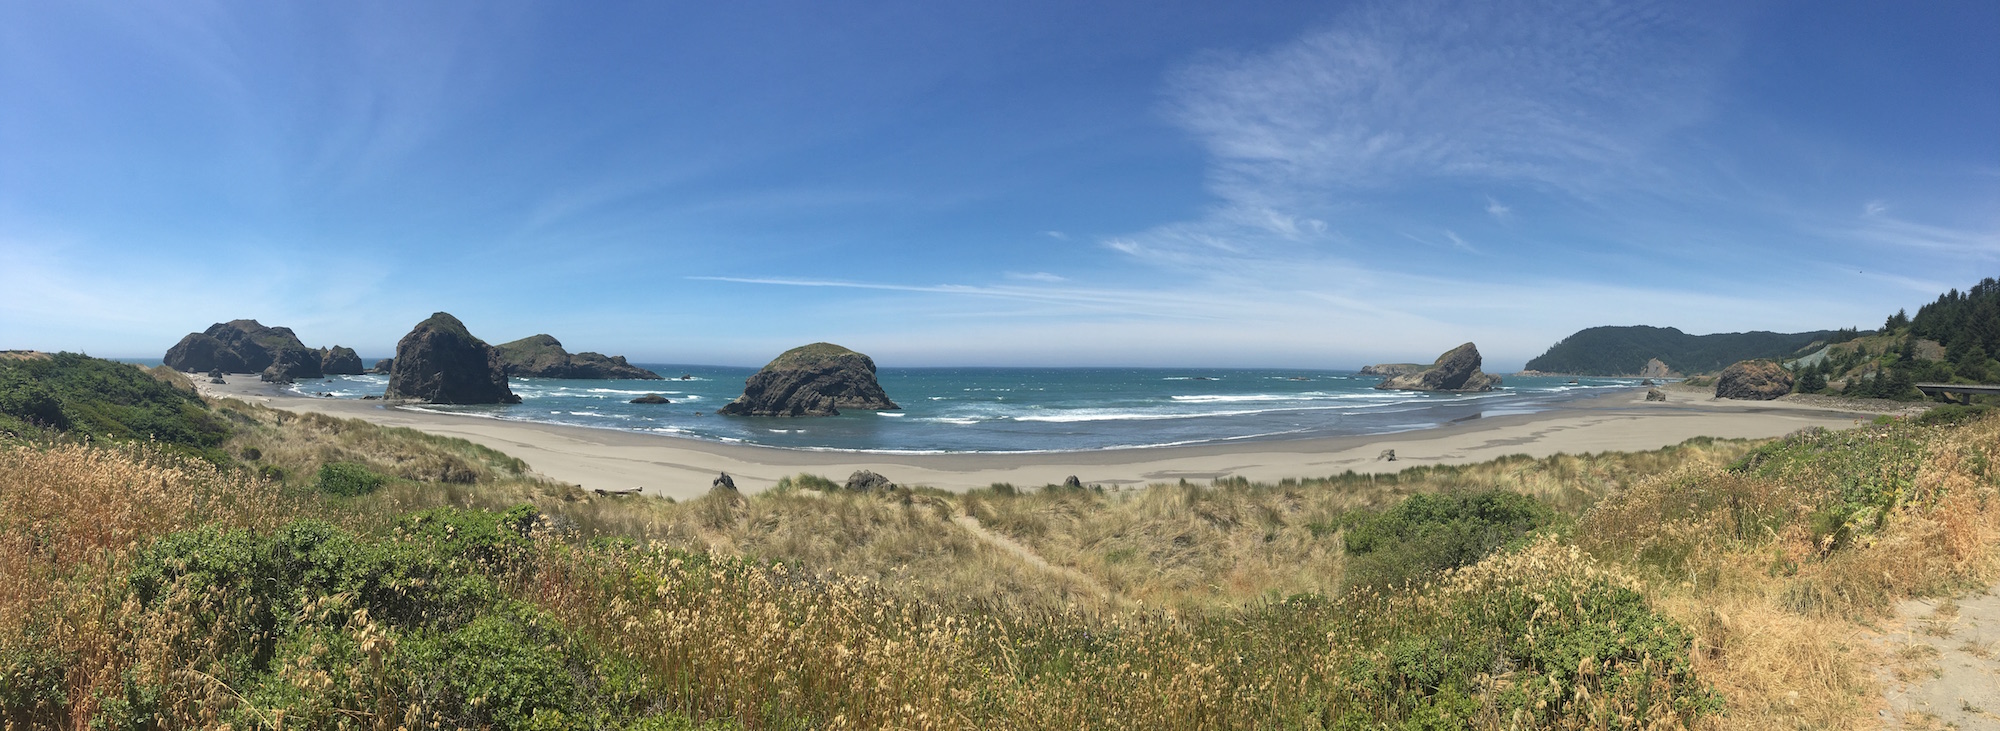 coast-panorama-3